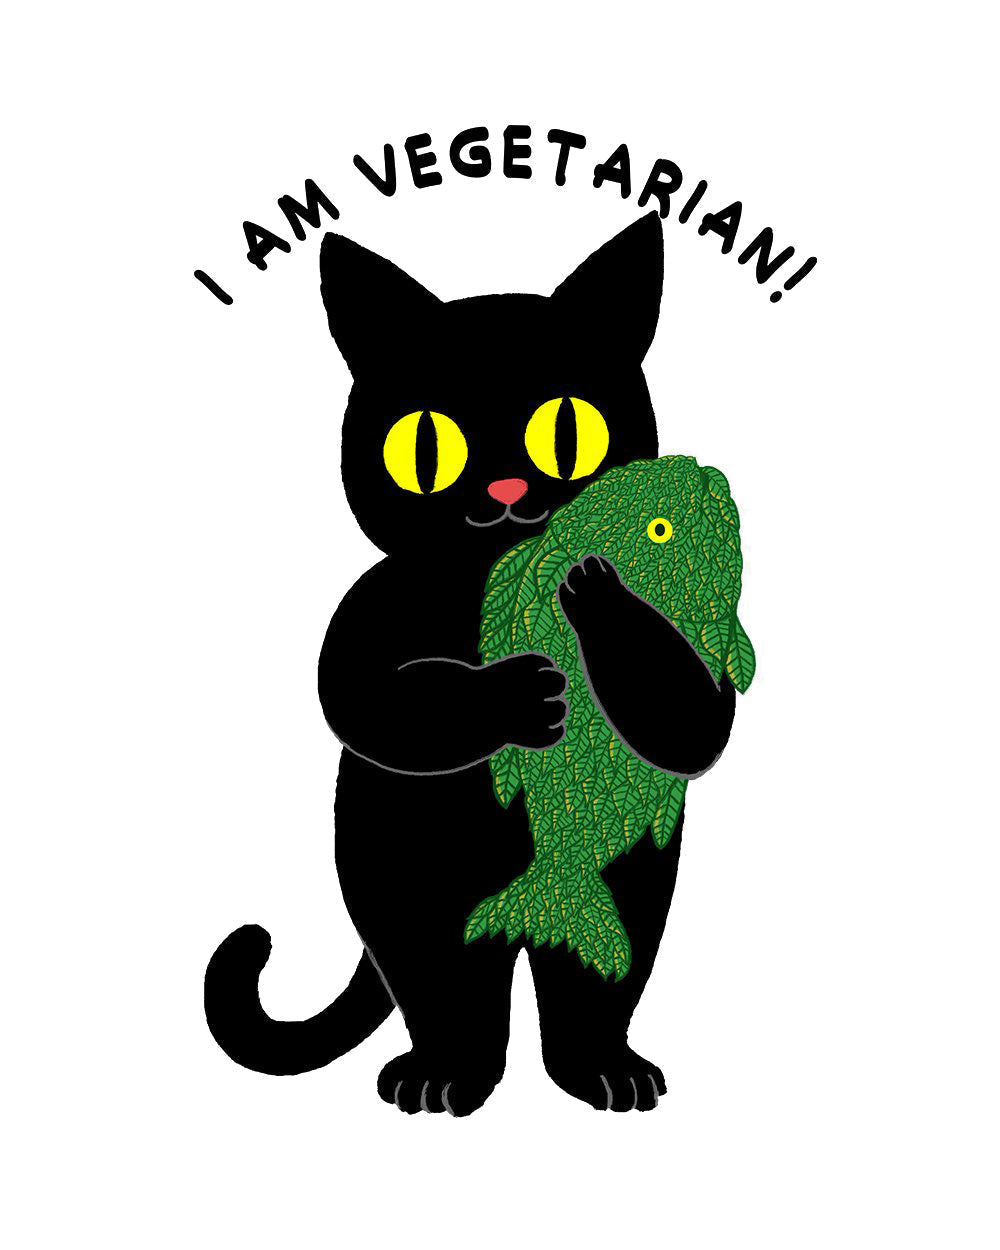 Vegetarian Funny Cat Fish Kitten Food Pet Animal Slogan Humorous Cotton T-Shirt